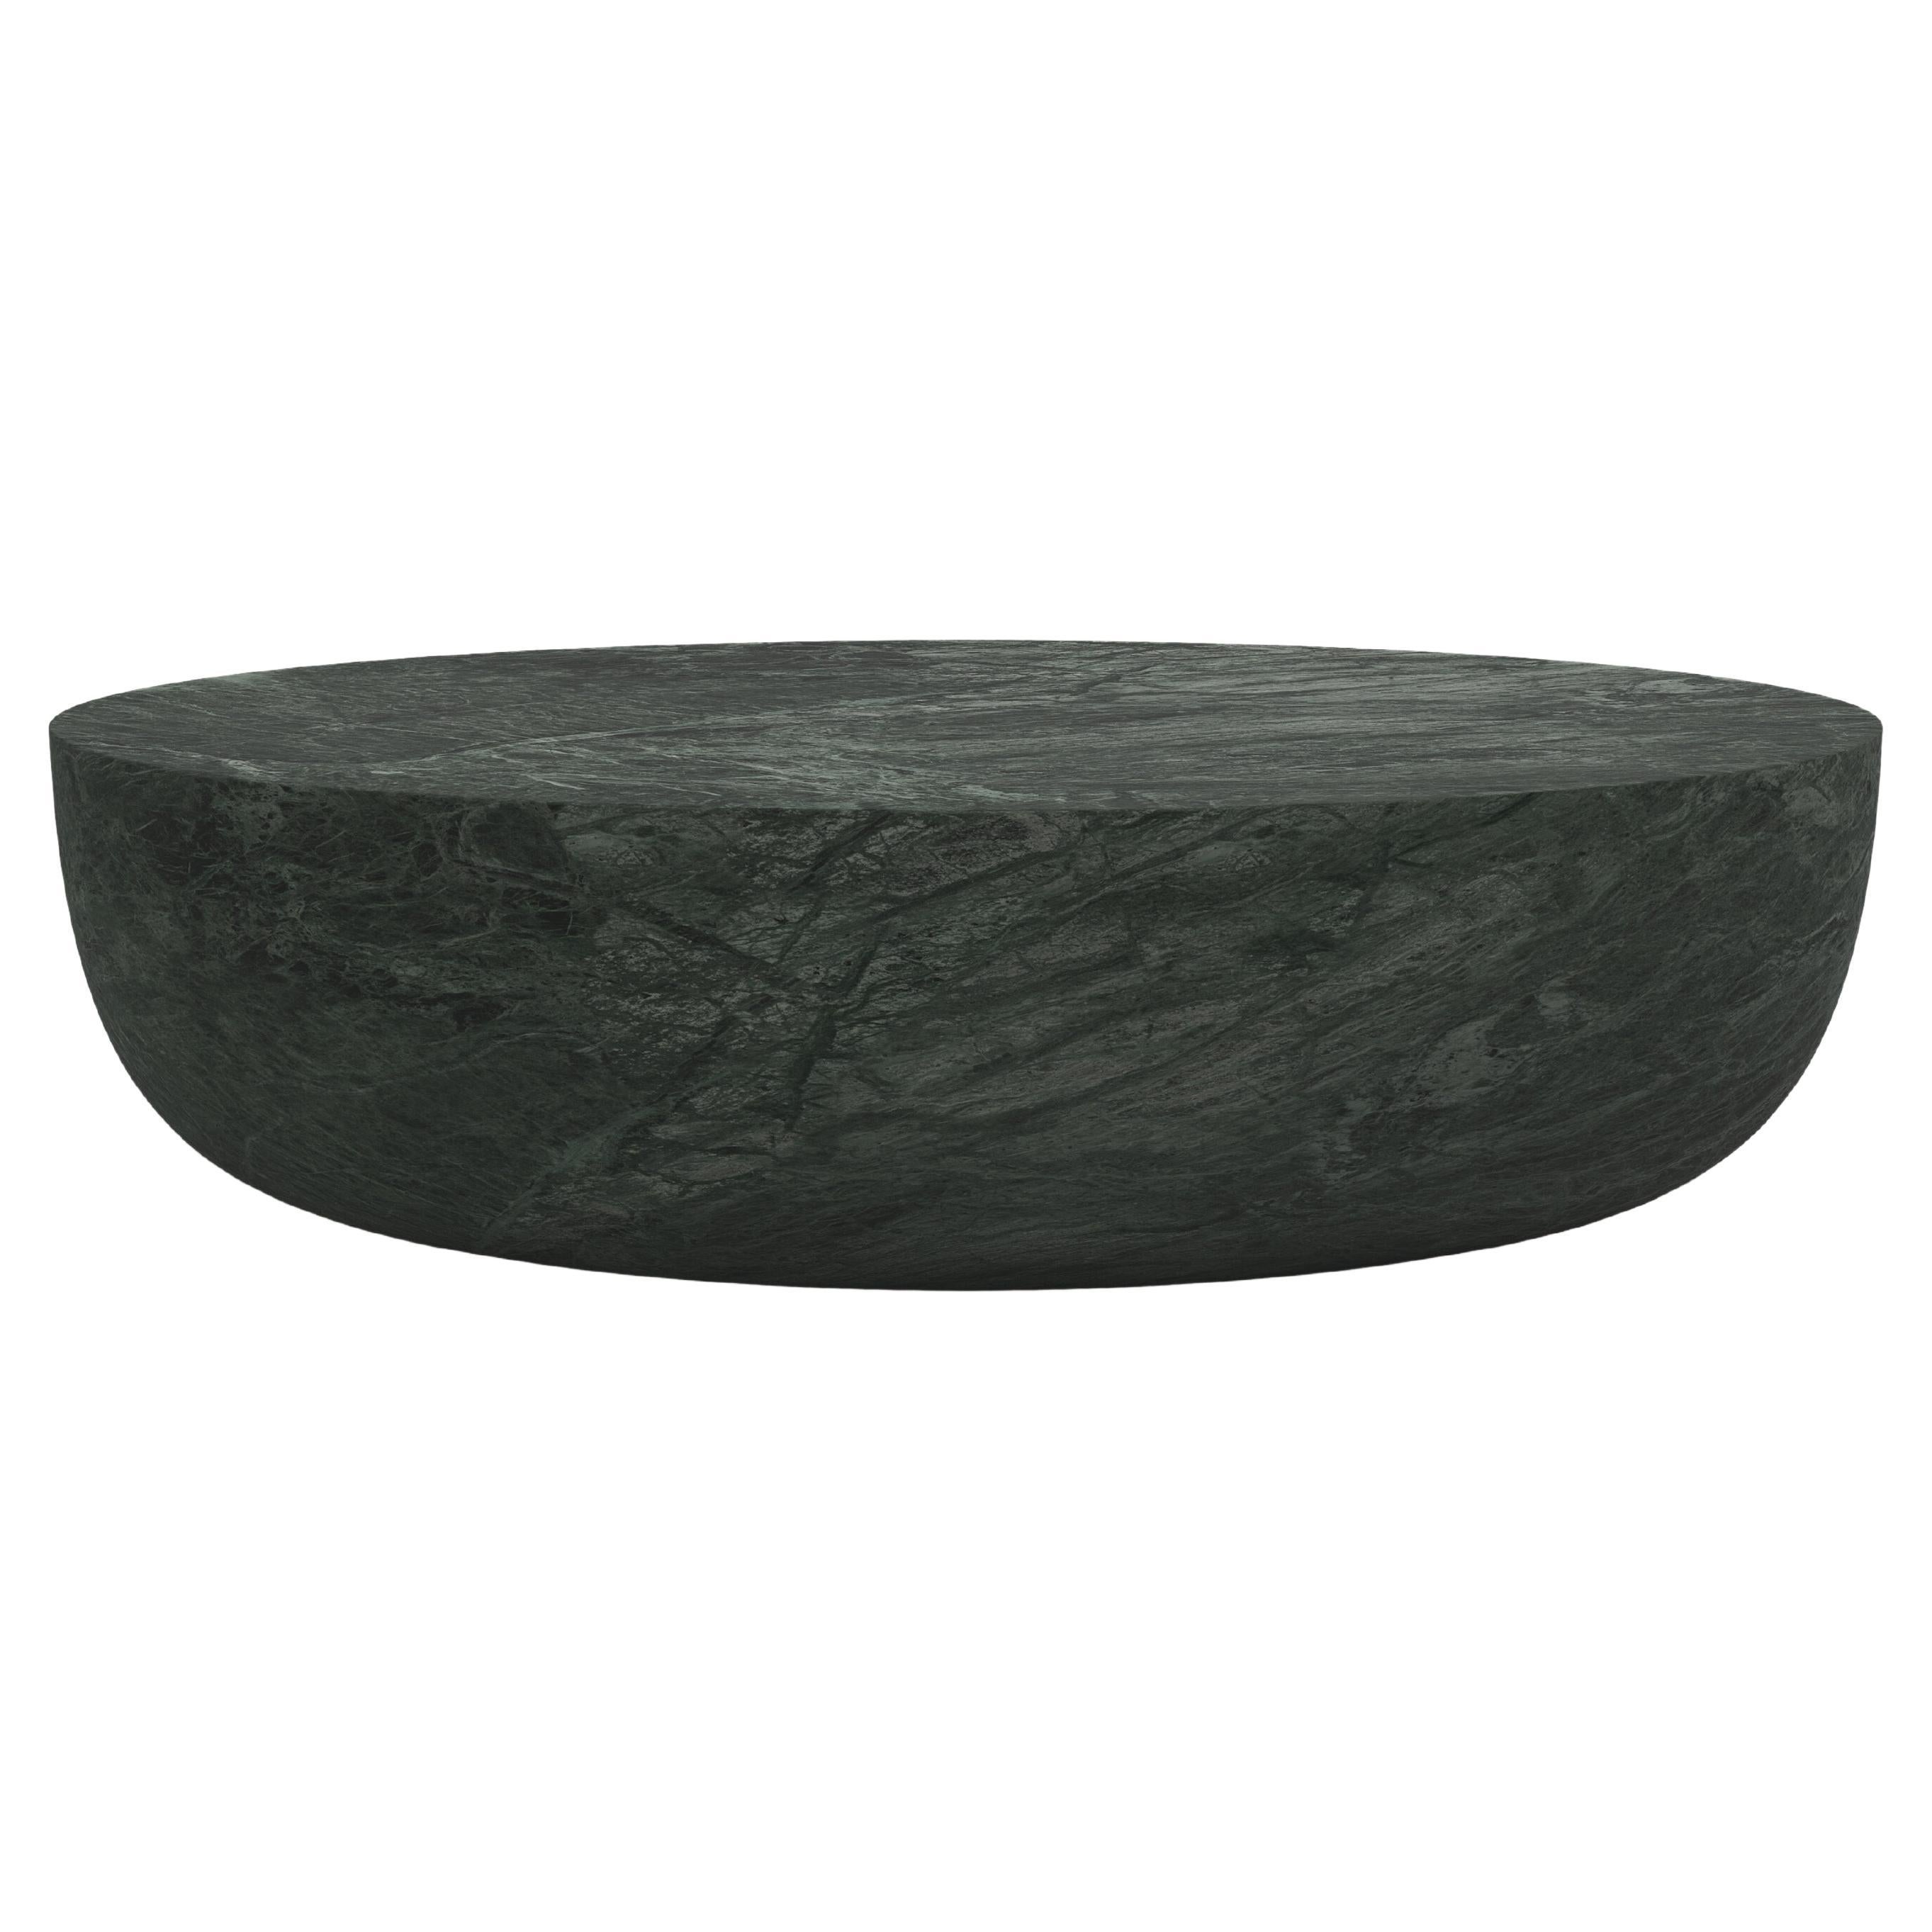 FORM(LA) Sfera Oval Coffee Table 72”L x 48”W x 16”H Verde Guatemala Marble